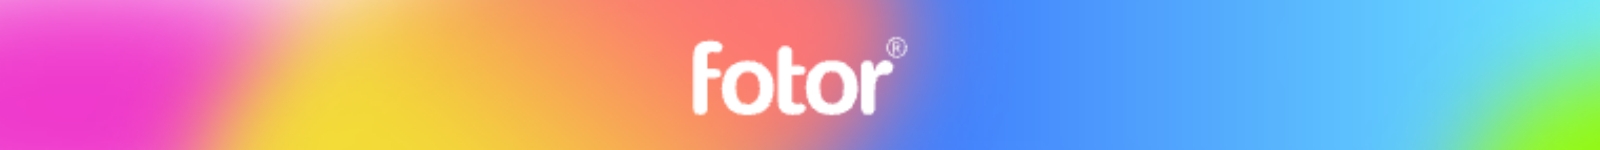 fotor brand logo